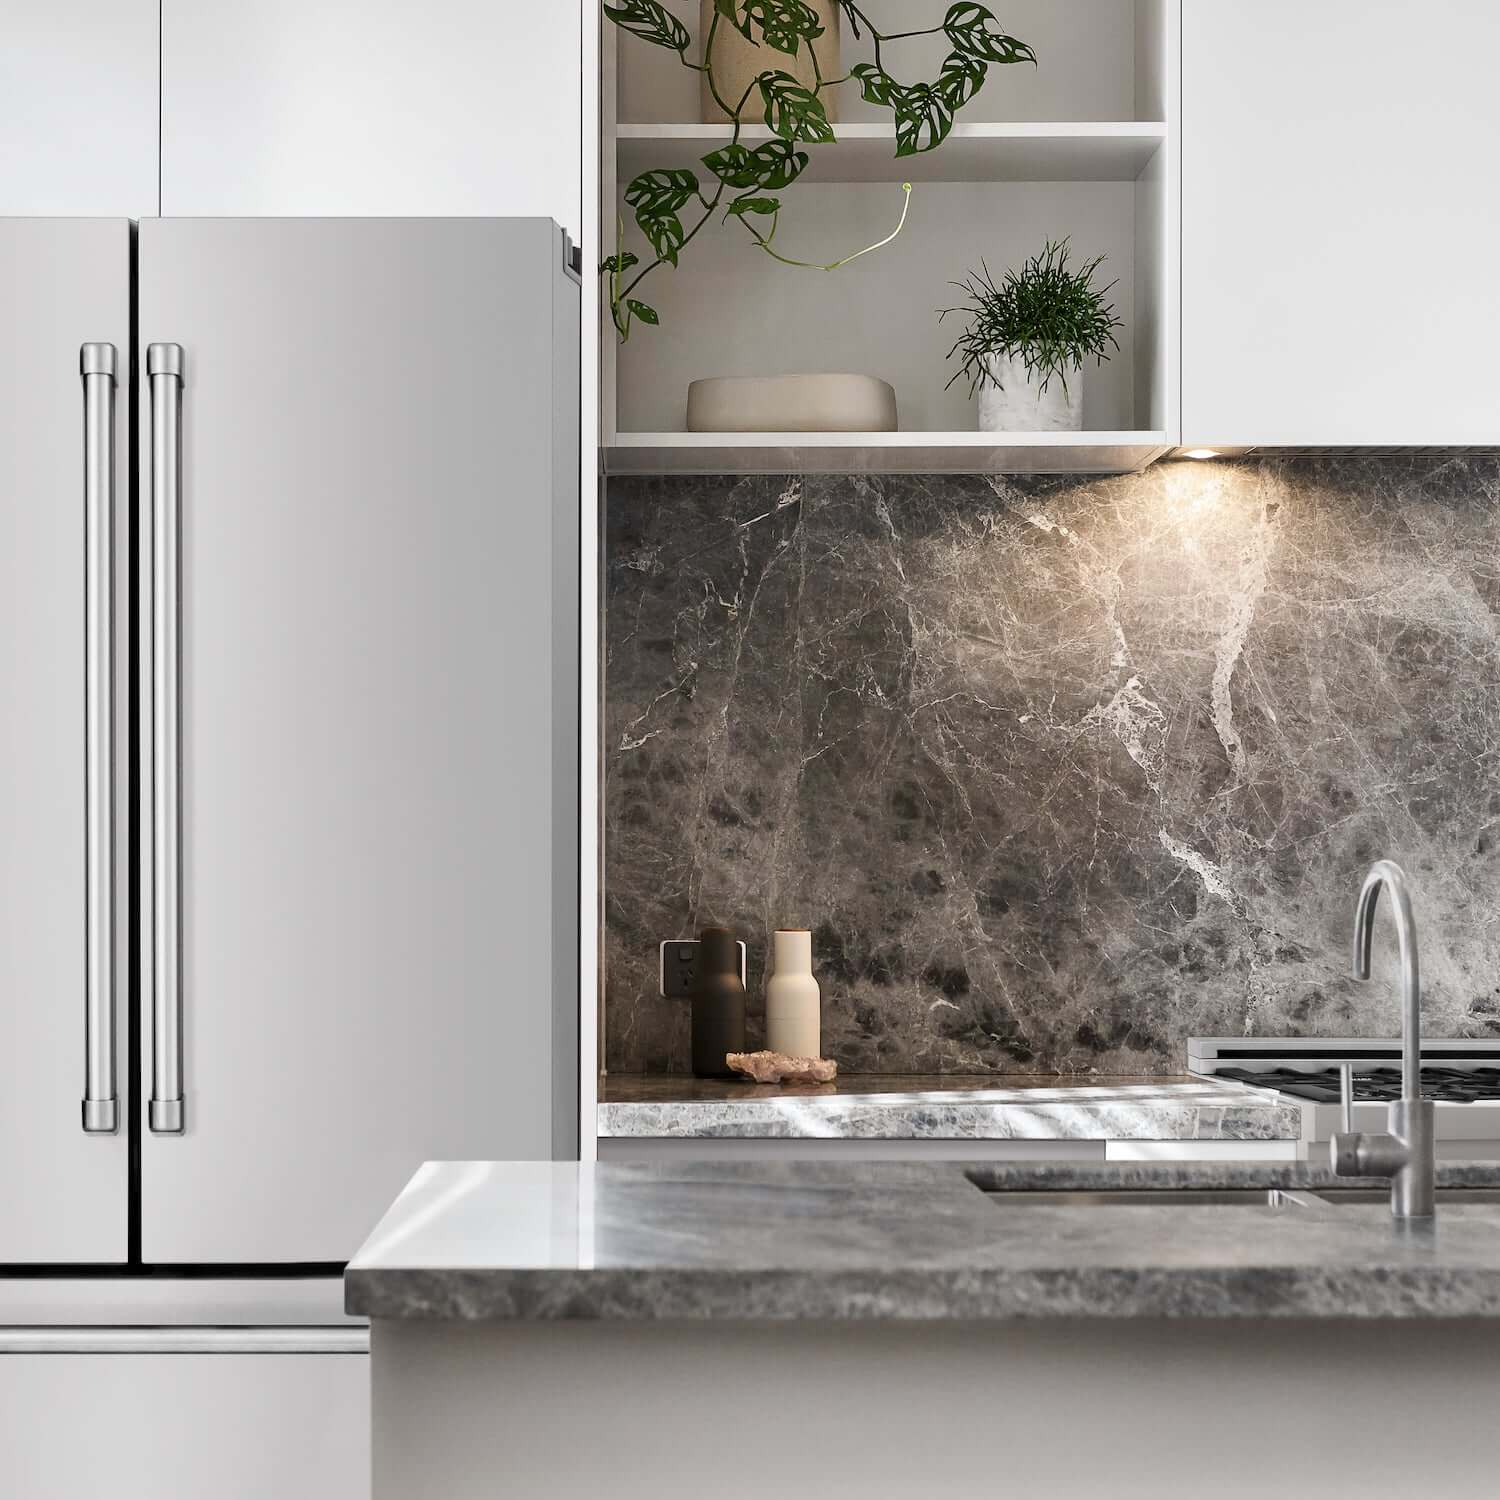 ZLINE 36 in. Freestanding Counter-depth French Door Refrigerator in a modern-style kitchen with stone backsplash.